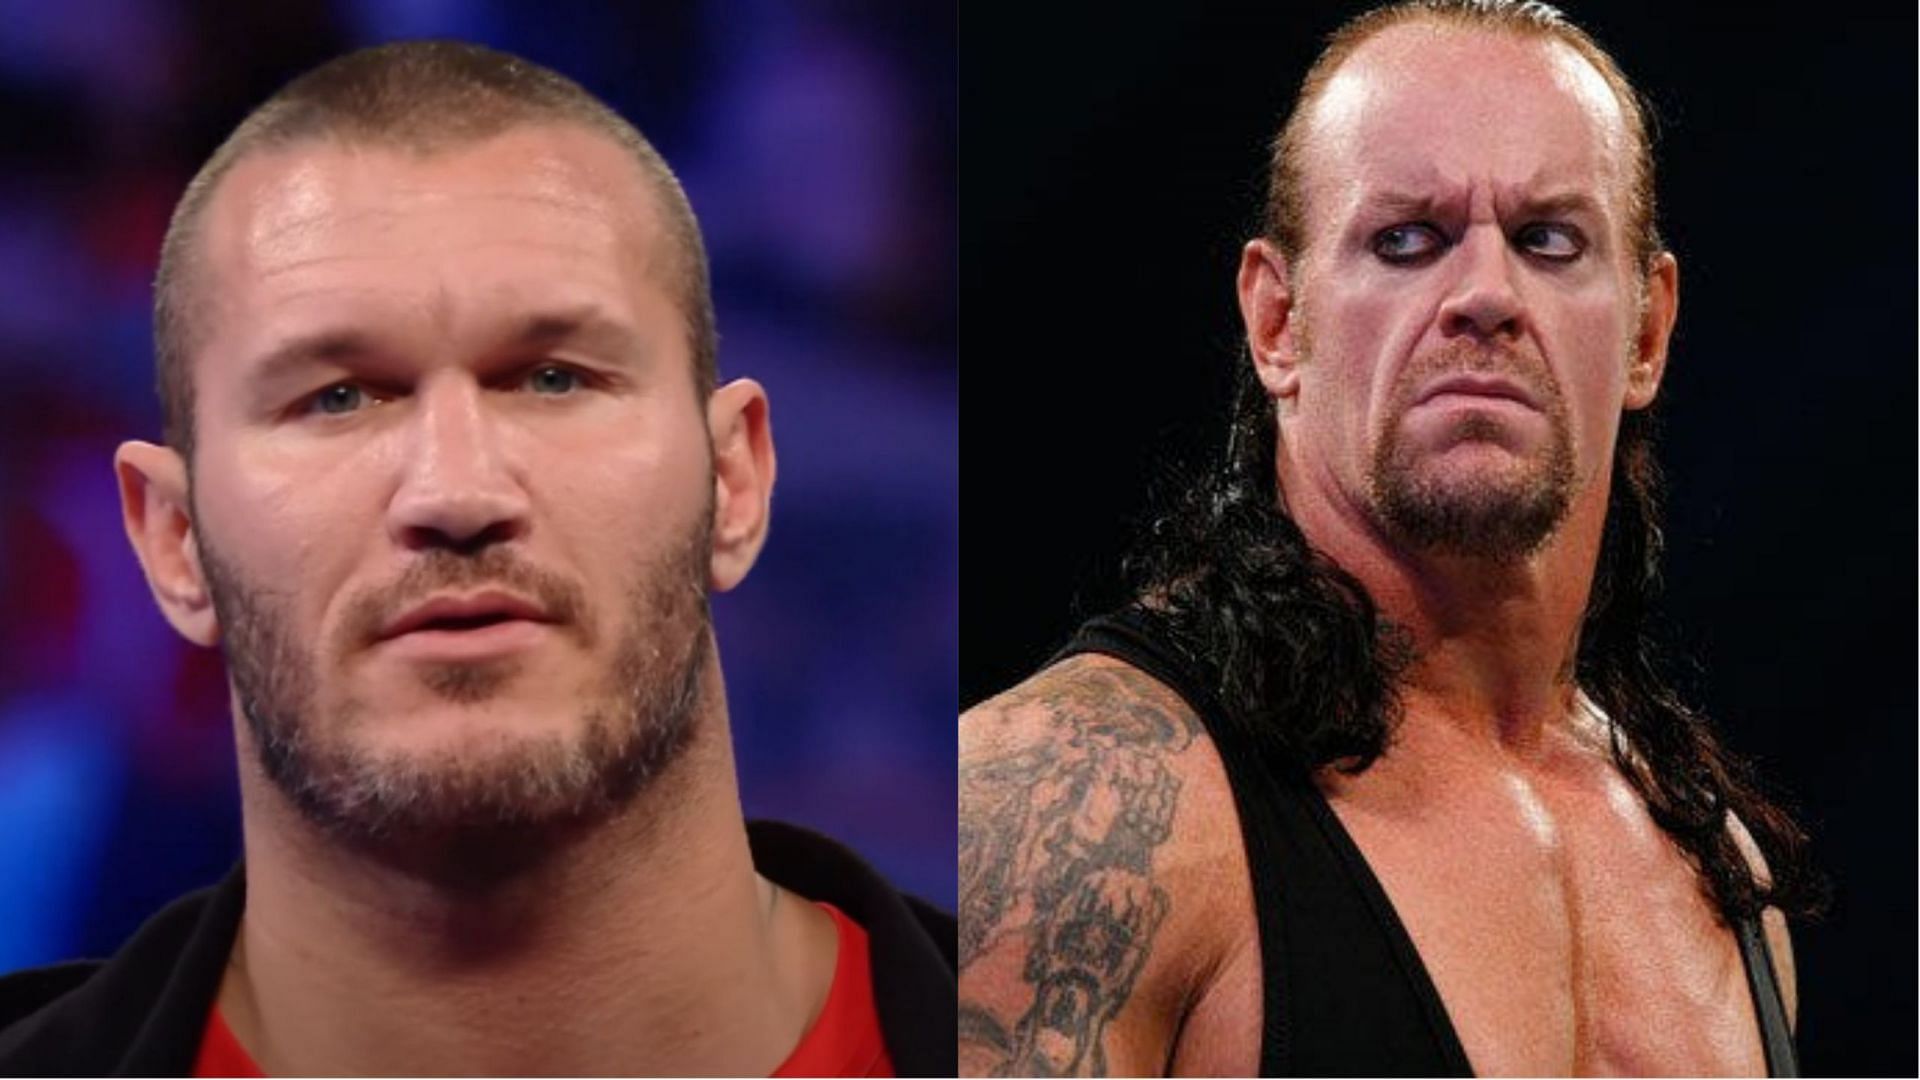 Randy Orton (left); The Undertaker (right)